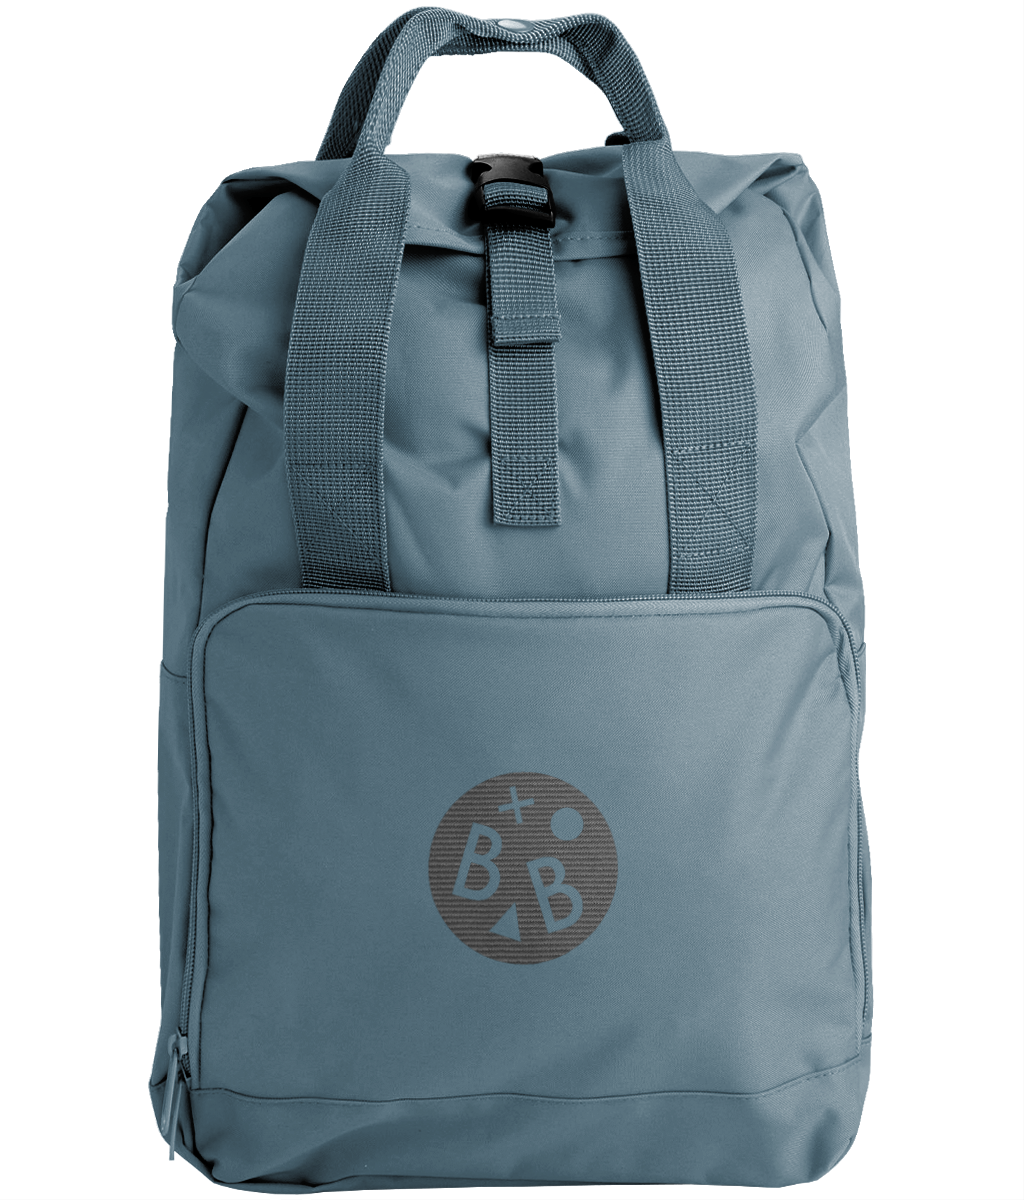 Parent's Nappy Bag Backpack